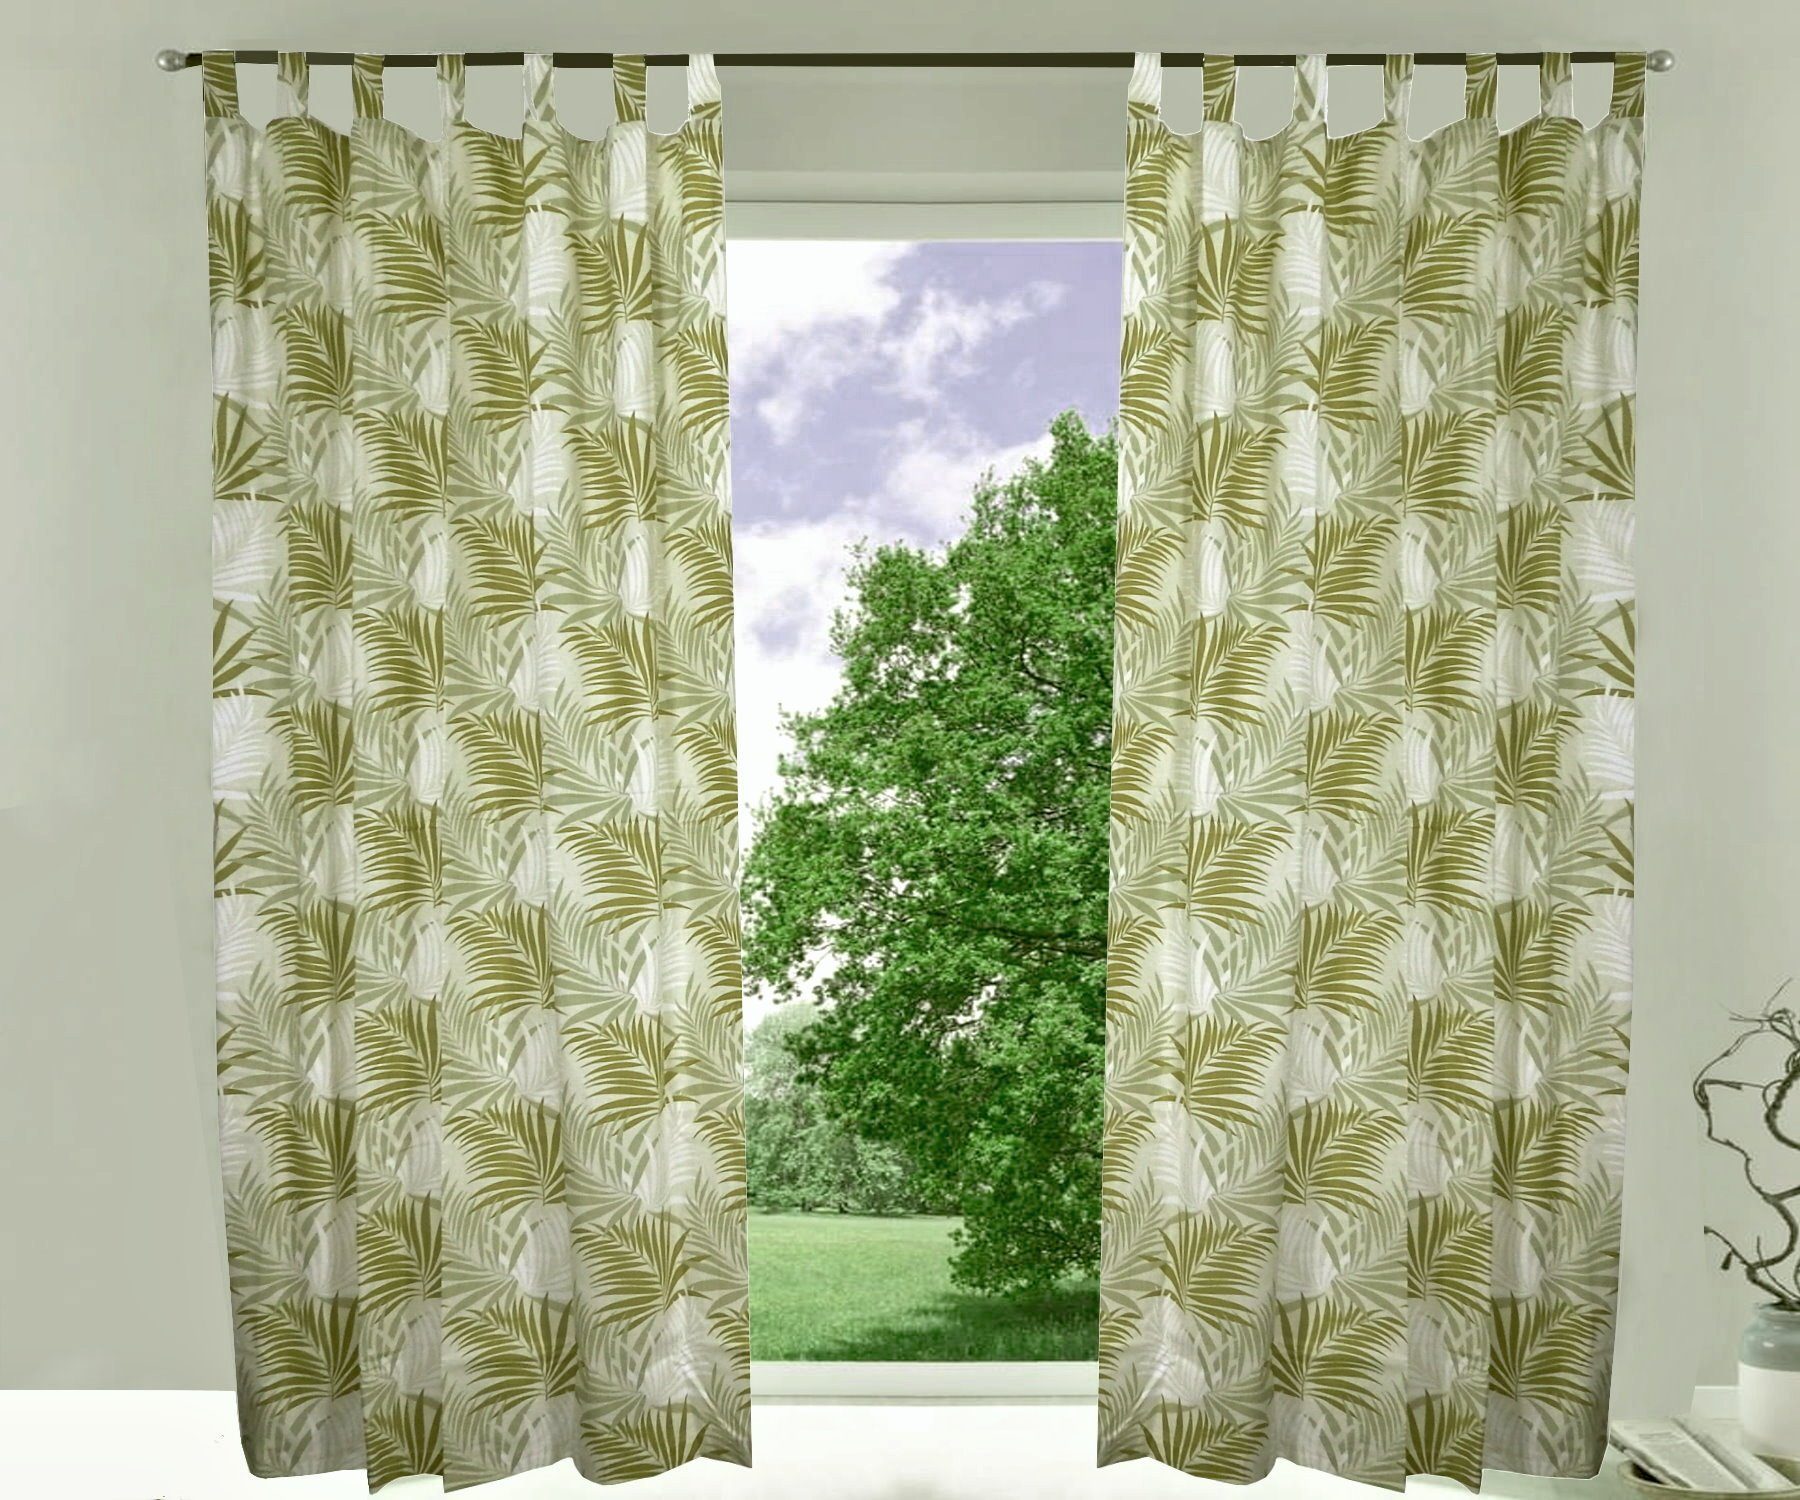 grün 135x245cm Palmenblätter live, Schal Gardinen Vorhang, blickdicht 2x Wohntextilien Fertigdeko (2 St), Schlaufen